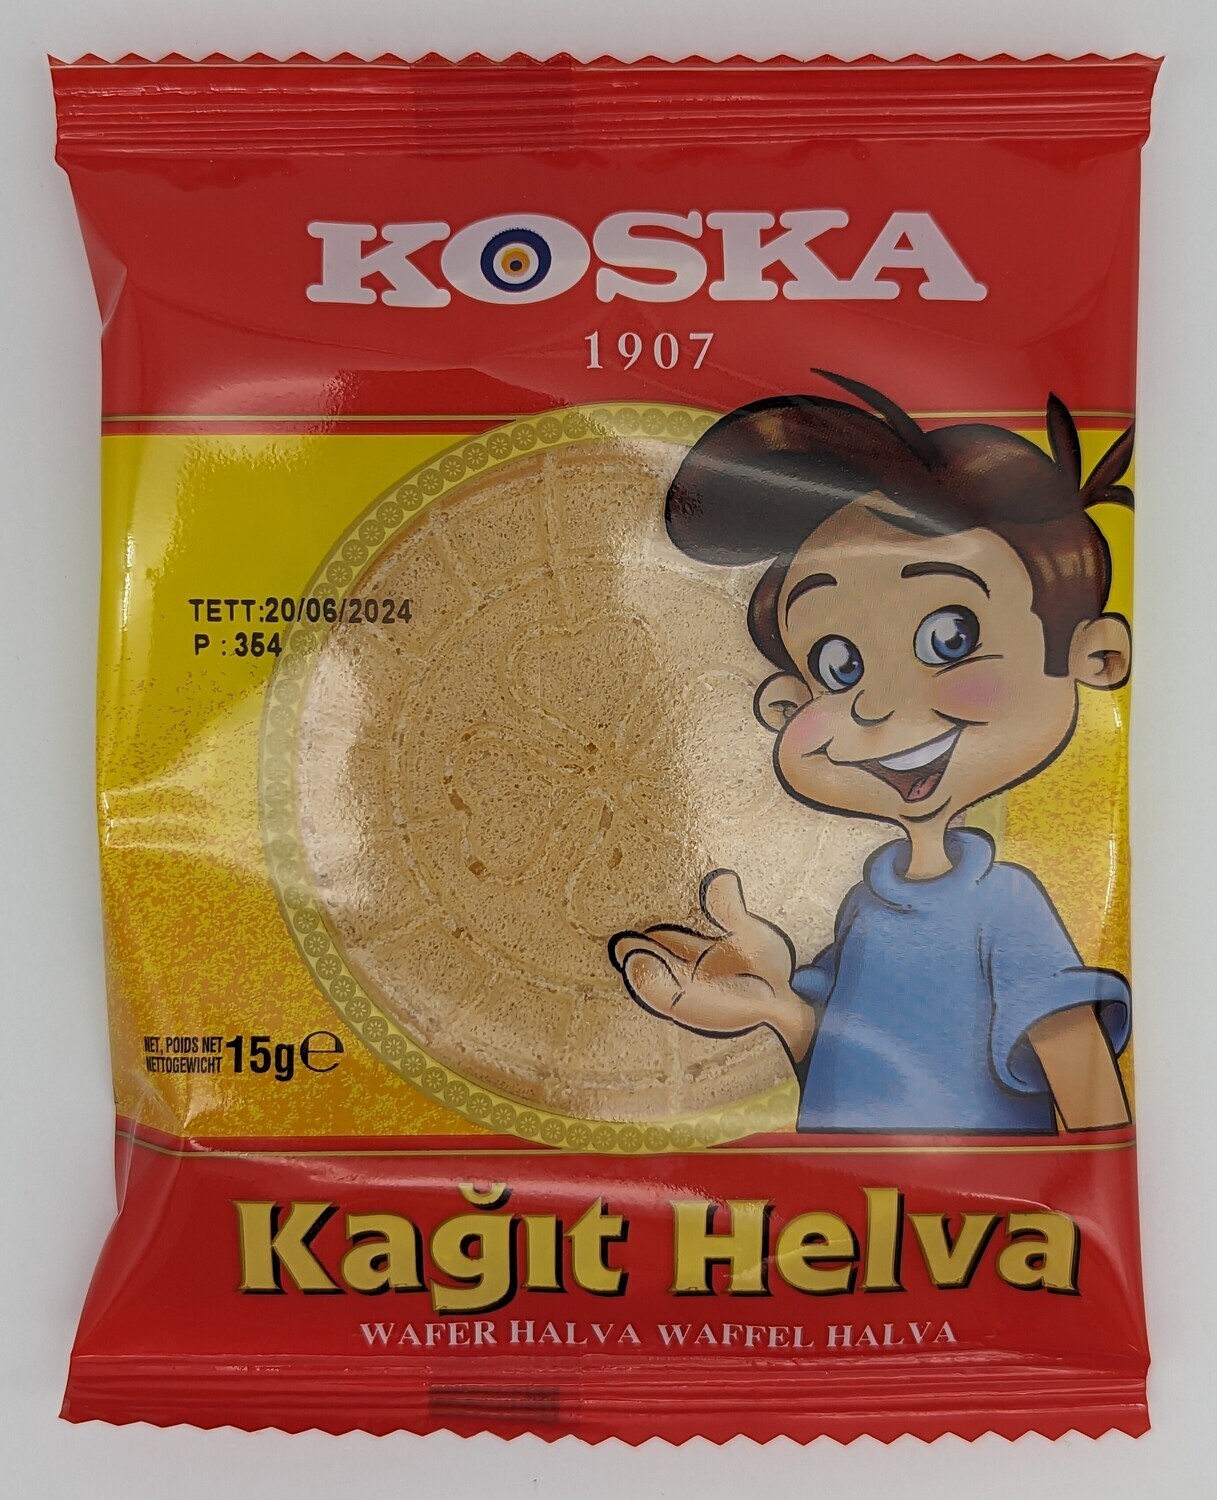 KOSKA Plain Wafer Halva Kagit Helva 15g